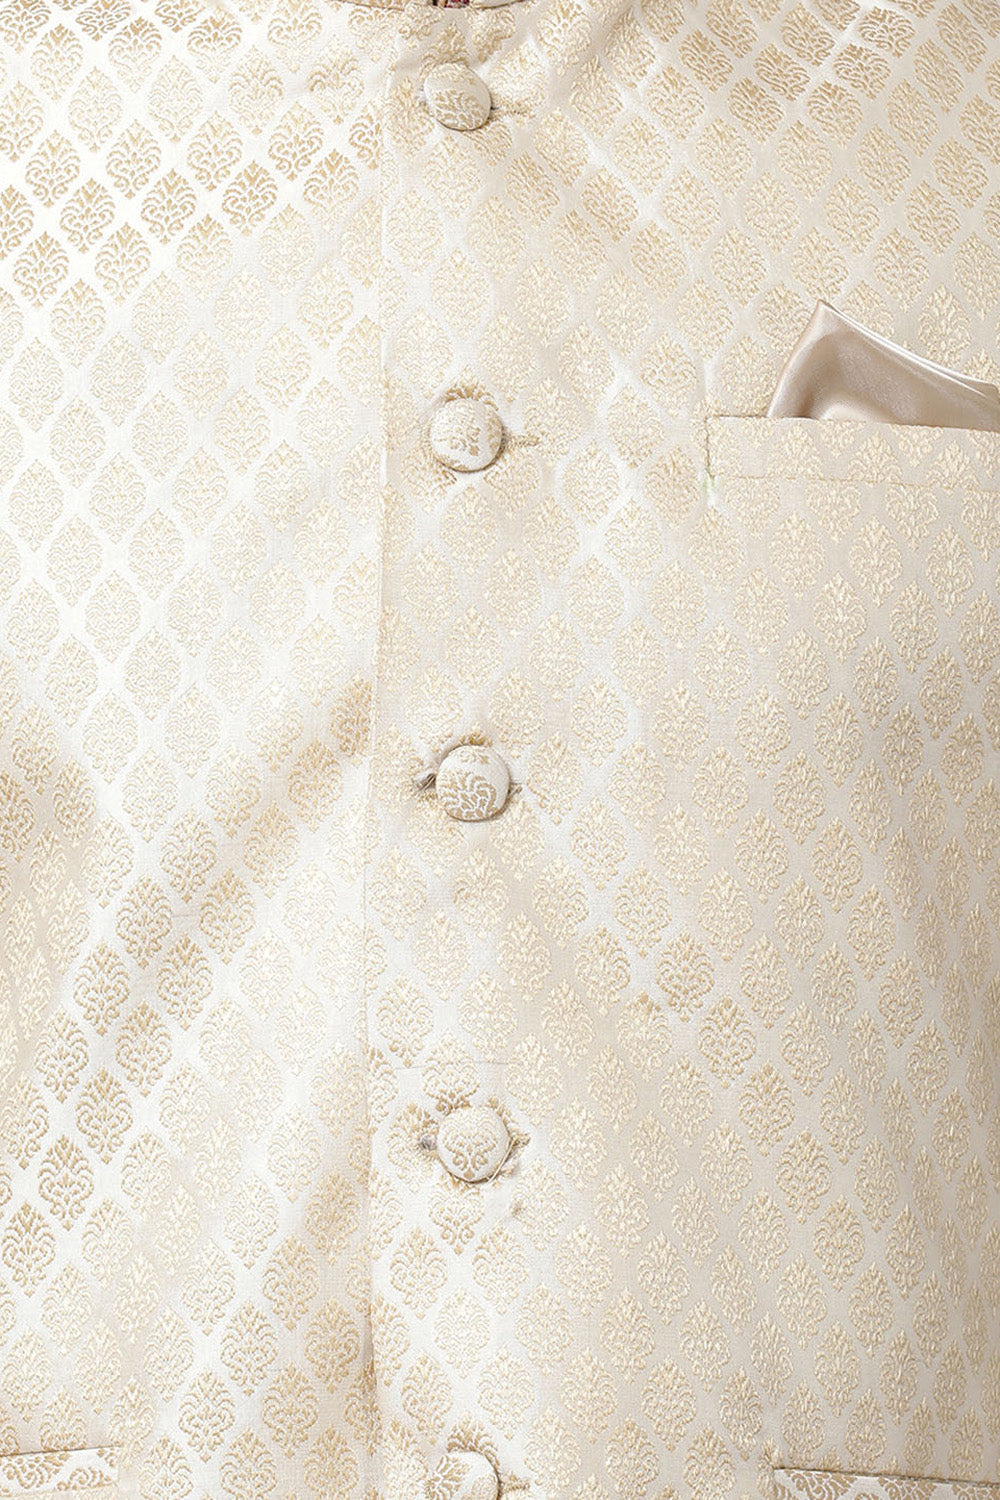 Men's Cotton Art Silk Kurta Set in Brown